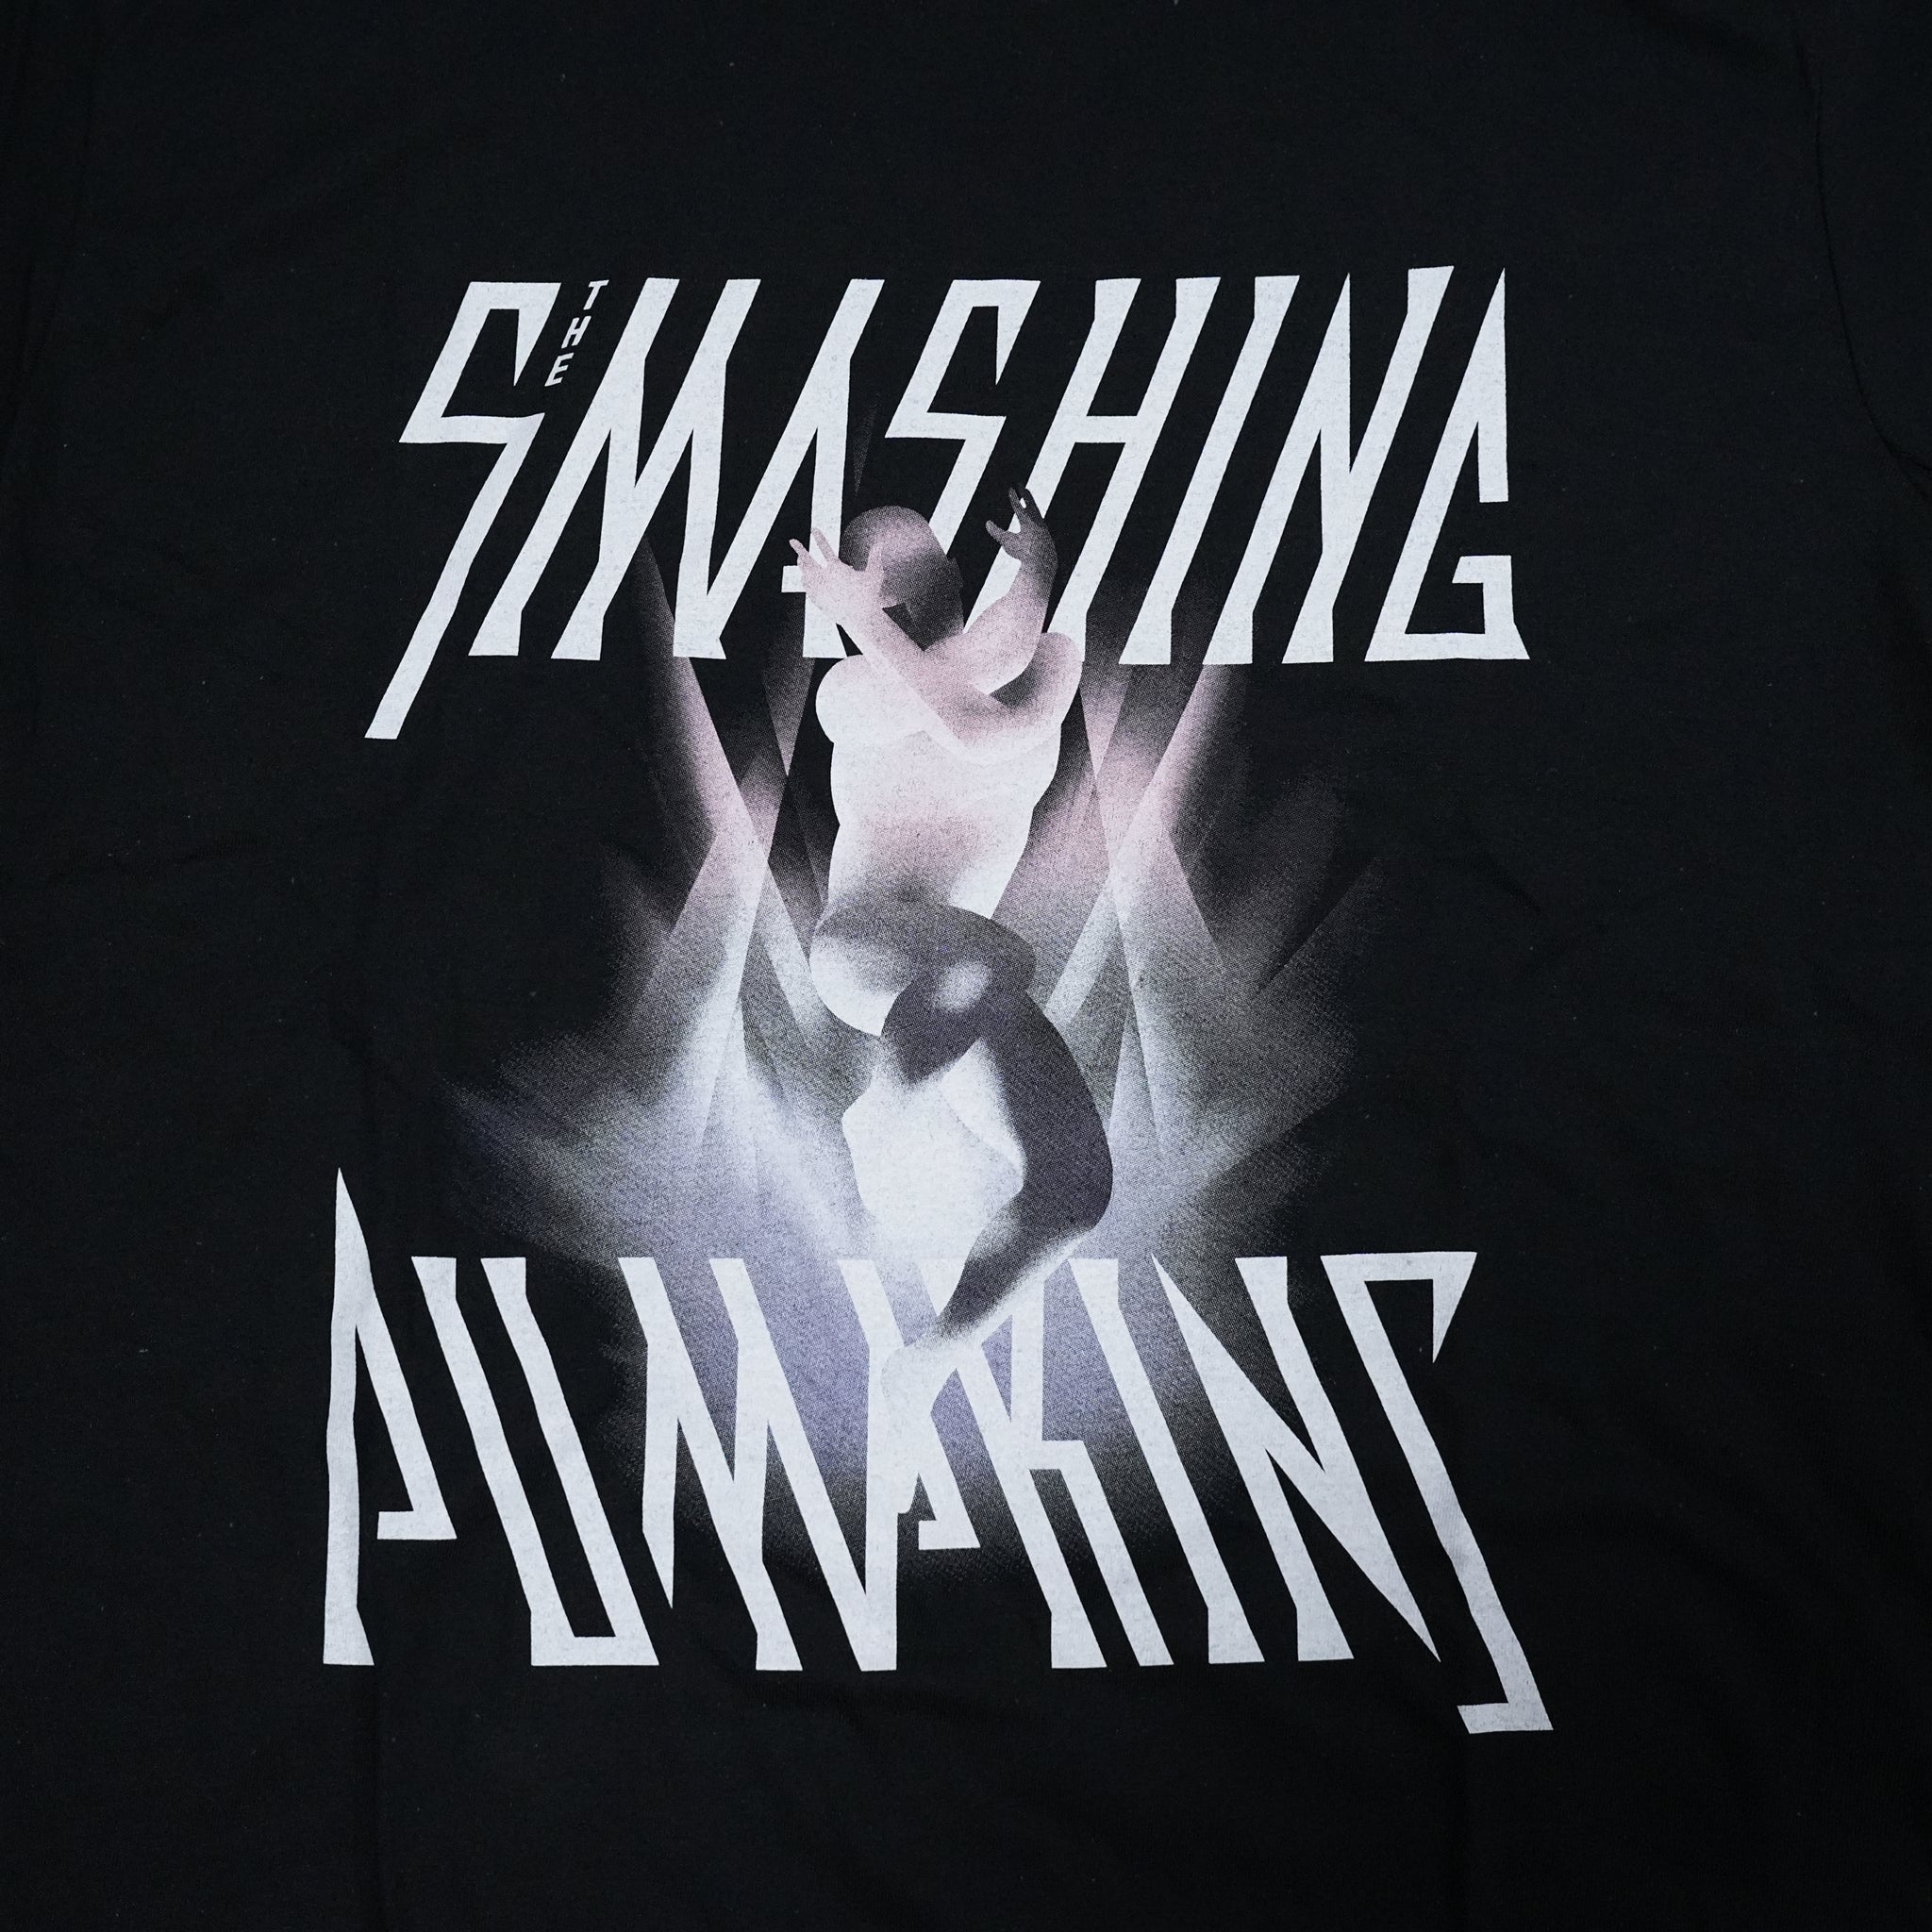 Name:SmashingPumpkins_CYR_Unisex_Black【ROCK OFF】【ネコポス選択可能】